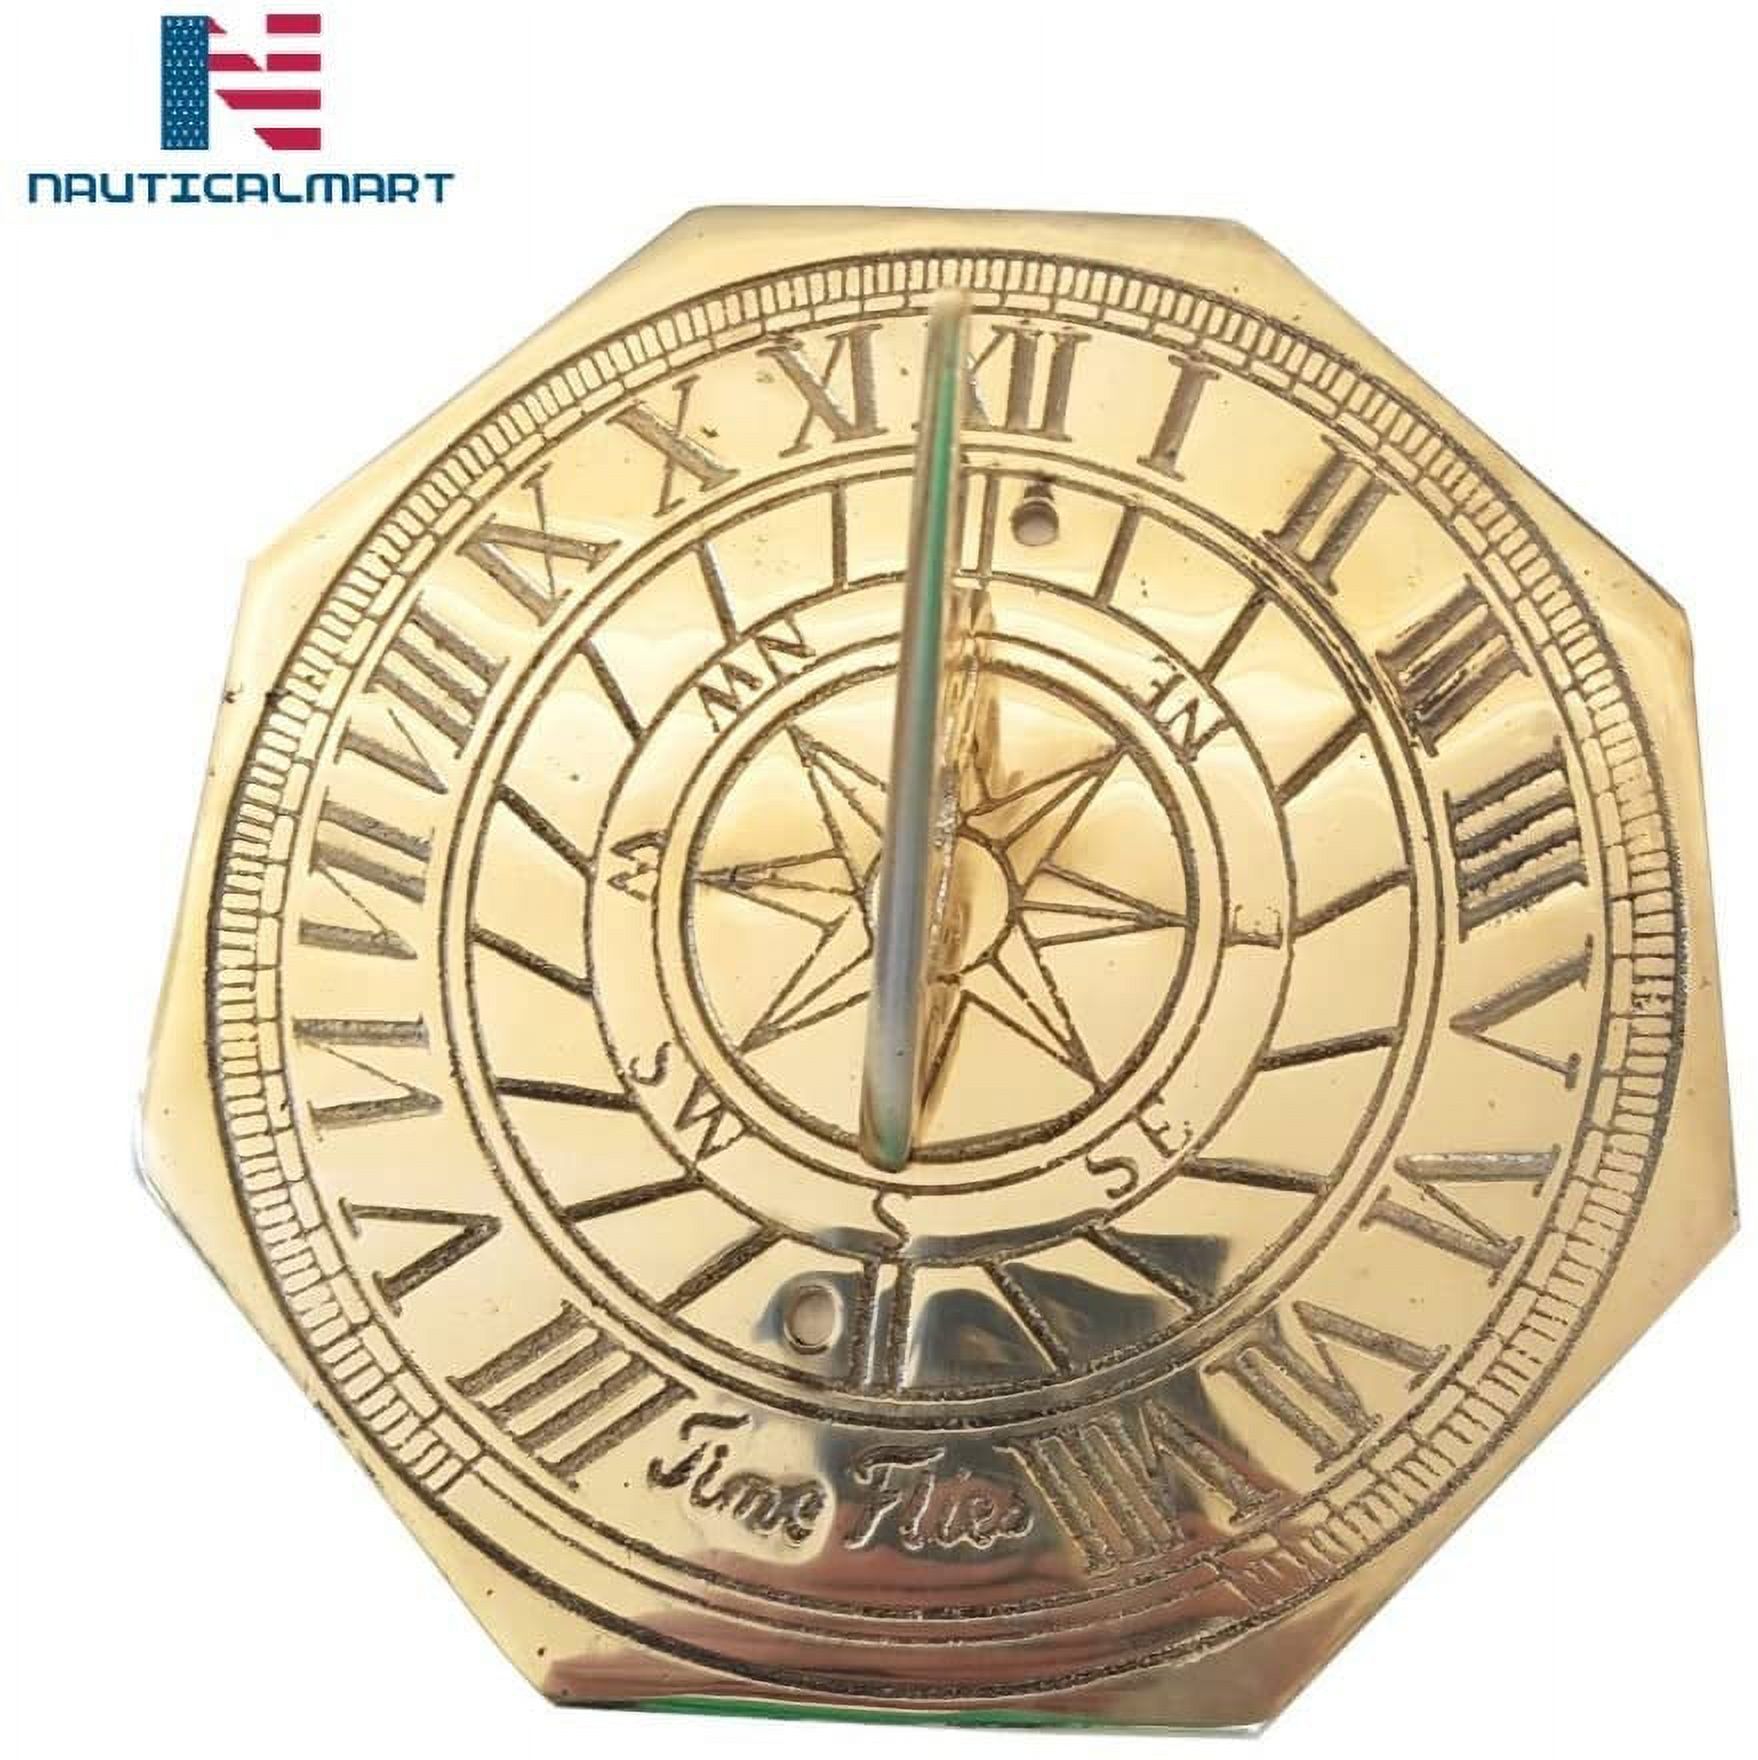 NAUTICALMART Time Flies 7.5'' Octagonal Brass Sundial - image 1 of 1